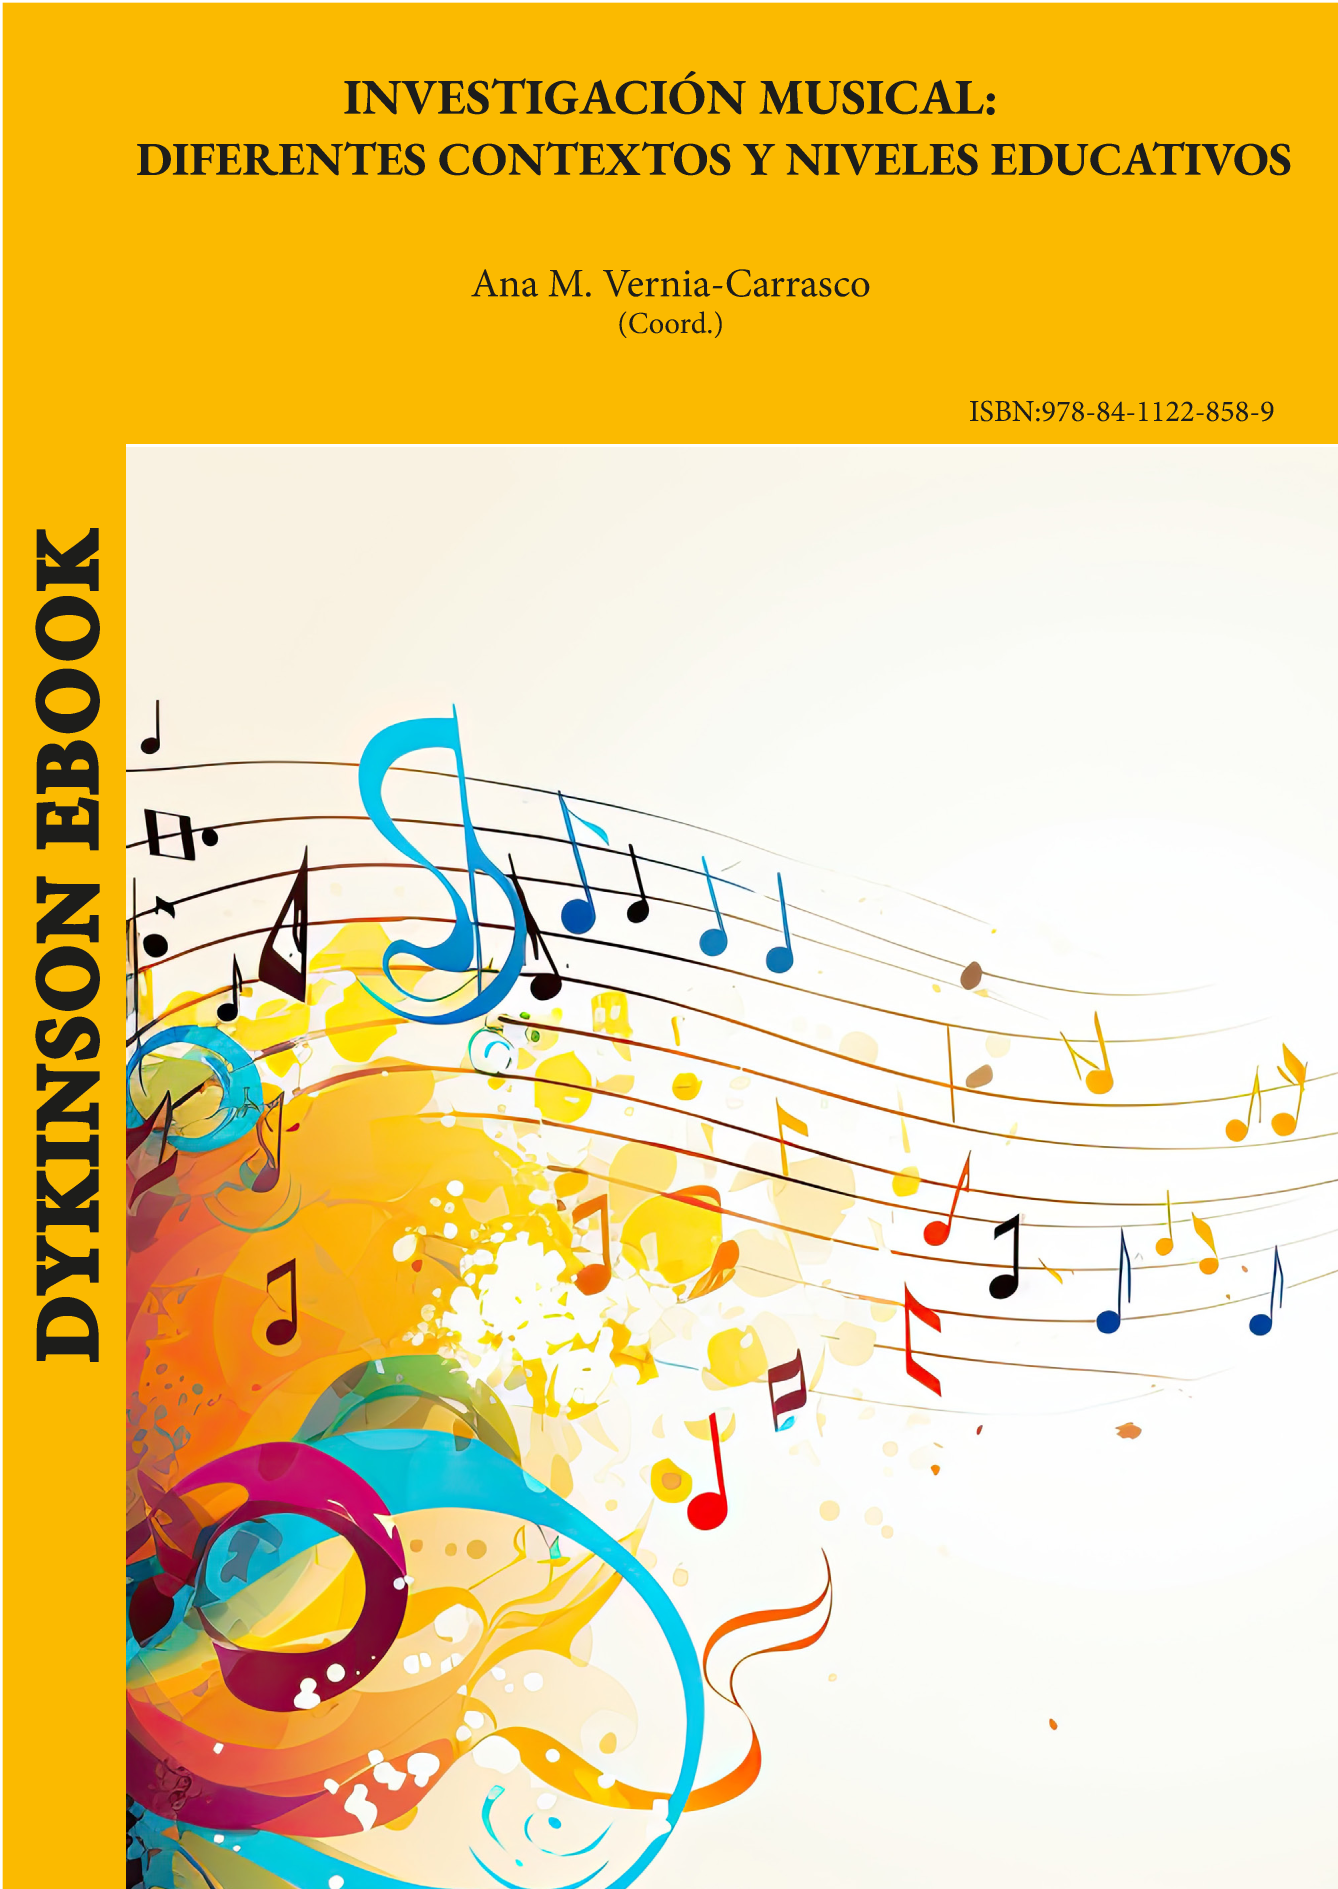 Investigación musical: diferentes contextos y niveles educativos